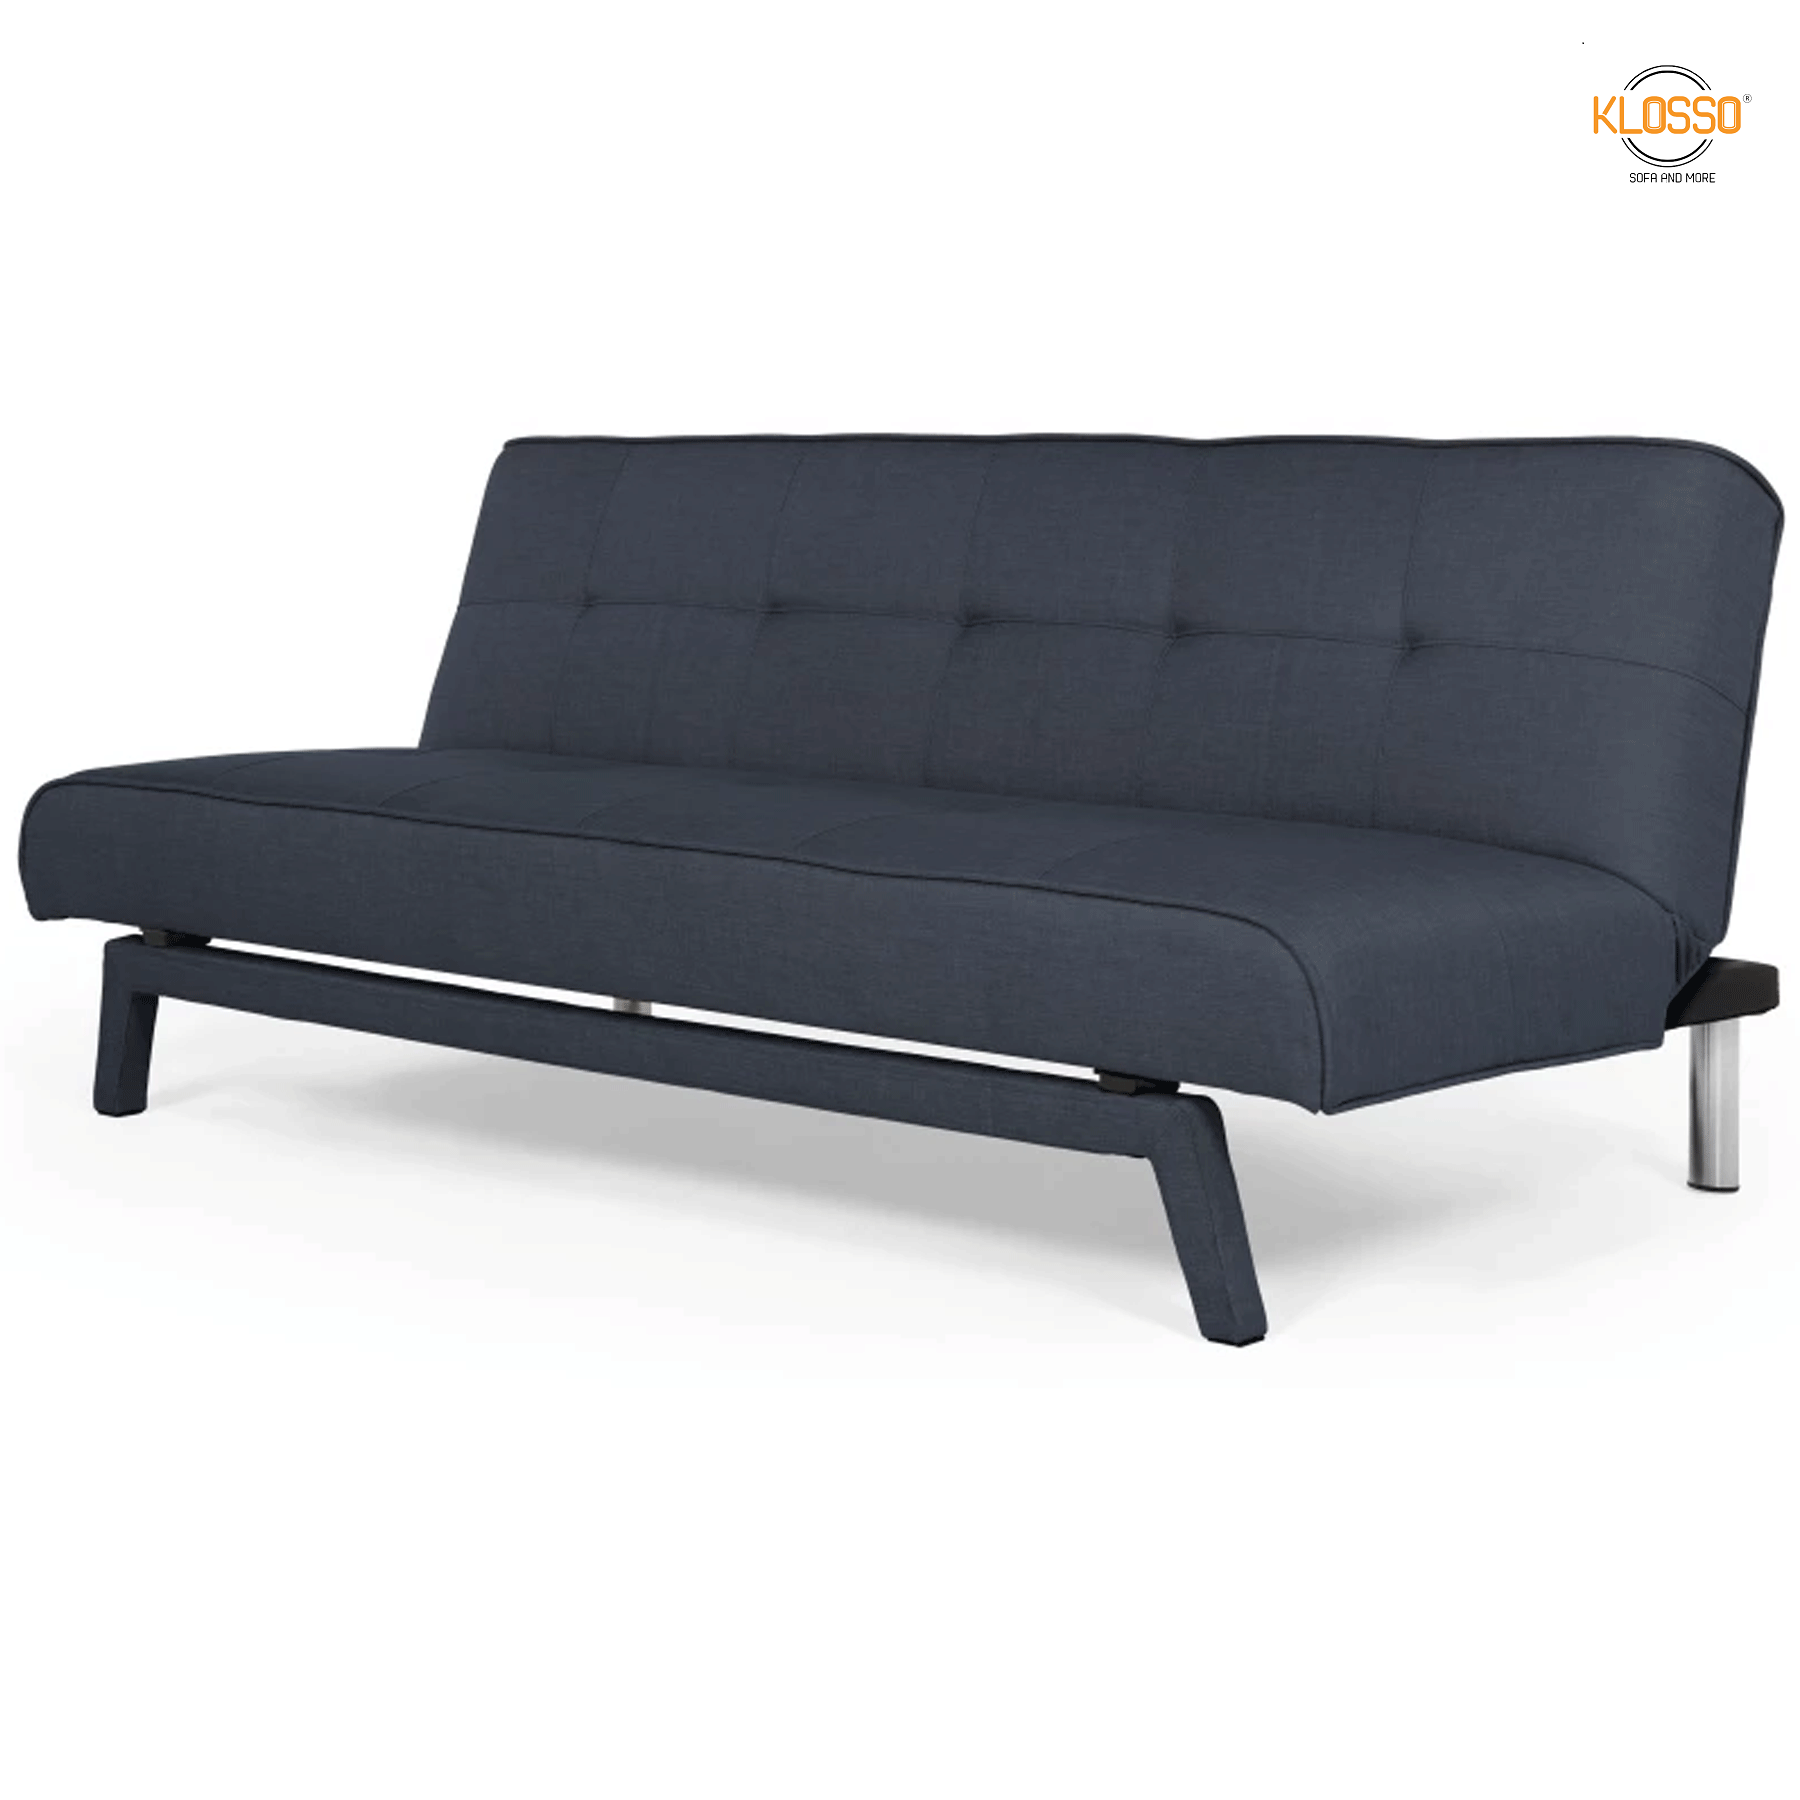 Sofa giường cao cấp Klosso KSB001-GBLA